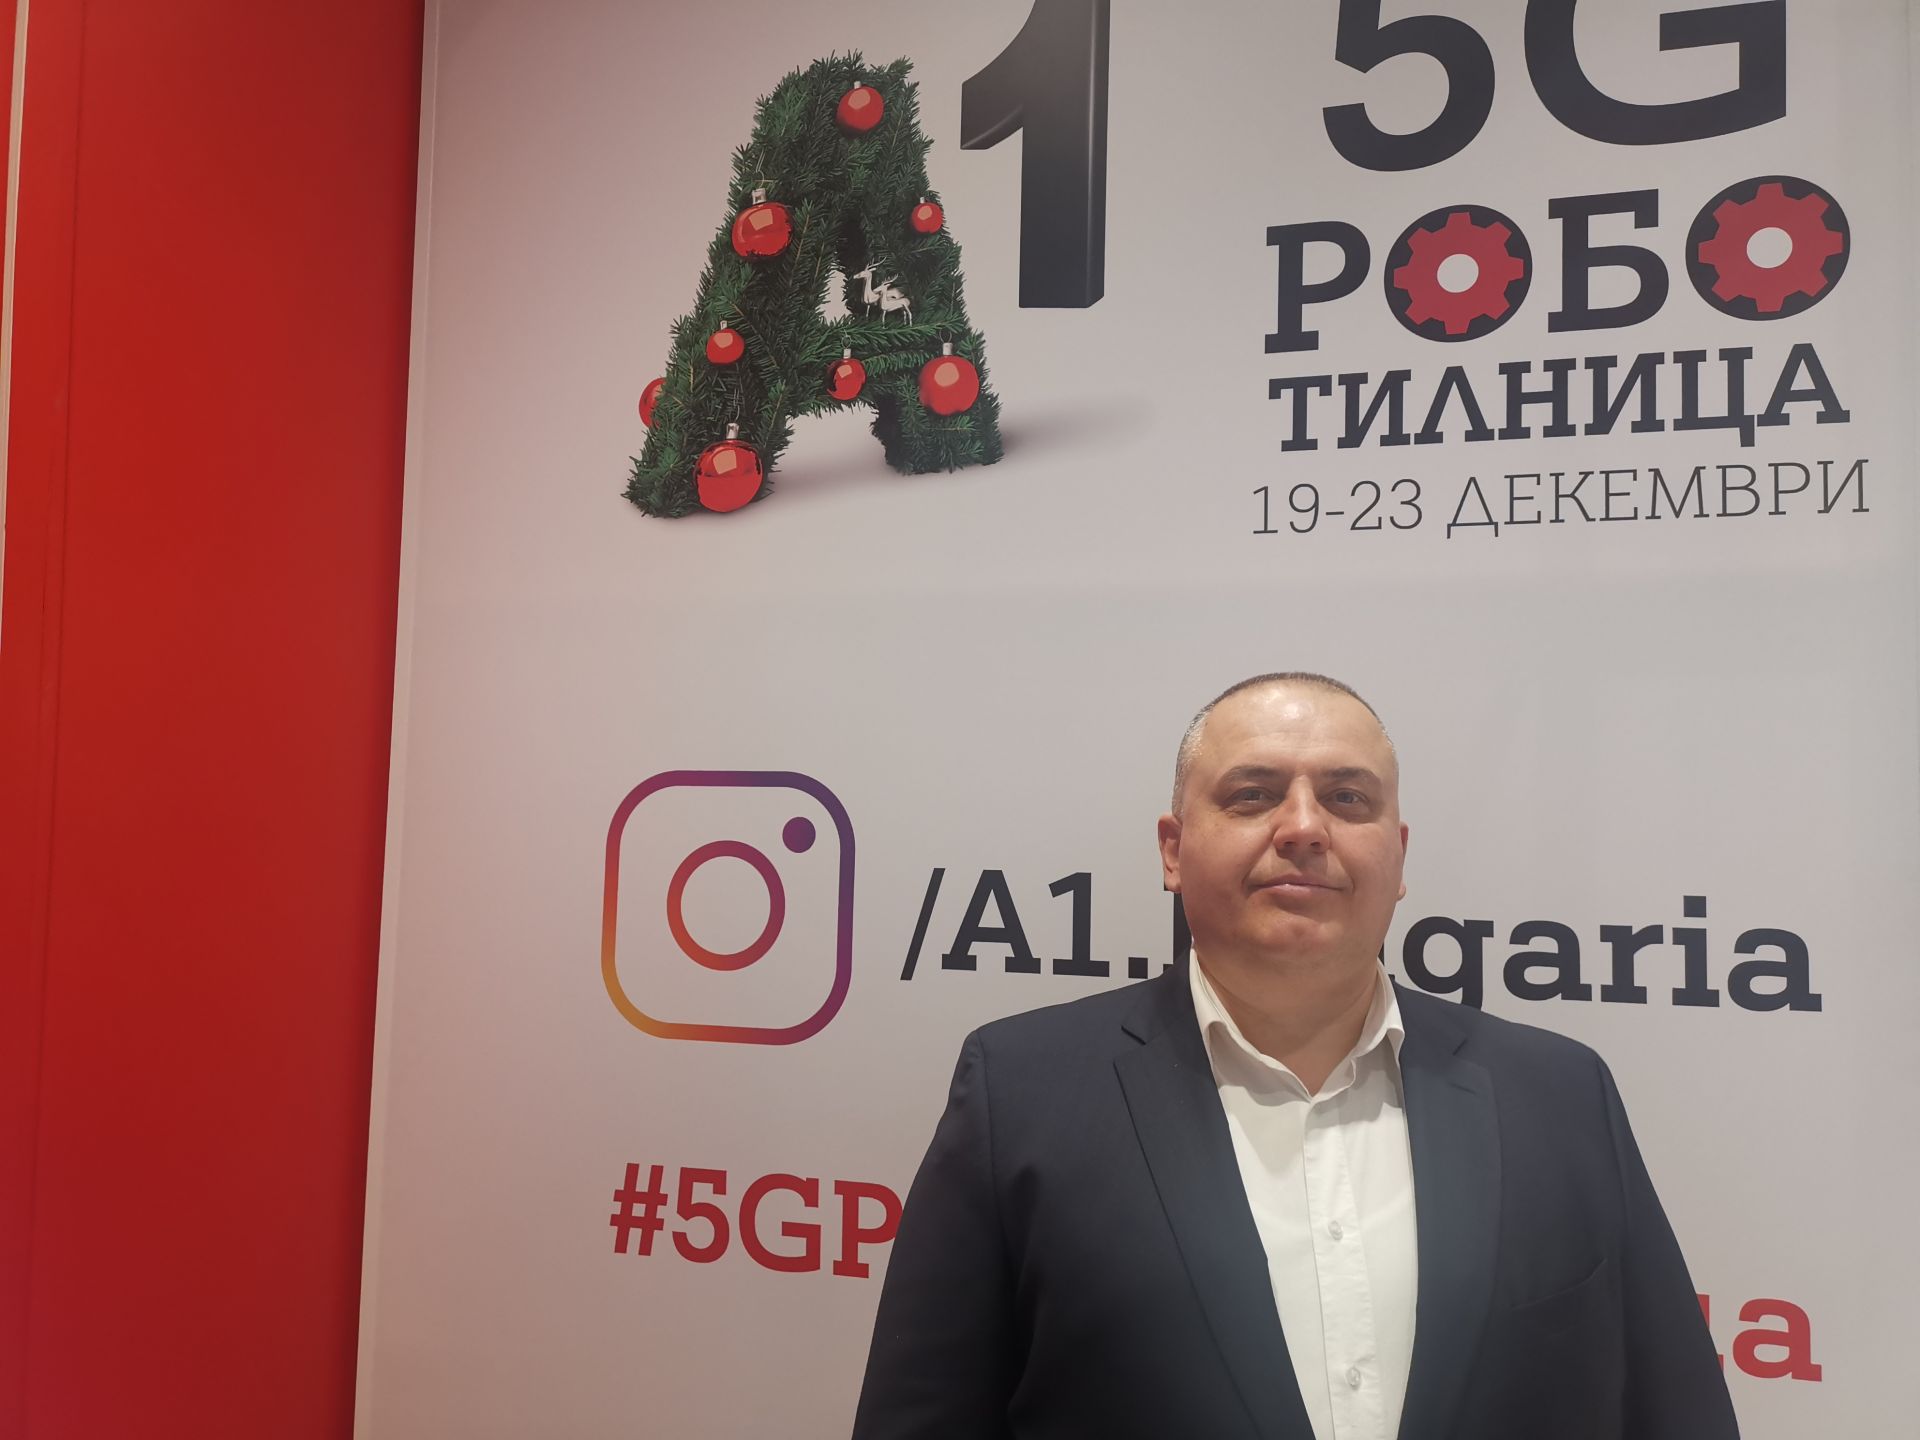 Красимир Петров, директор "Конвергентна мрежа и услуги" в А1 България